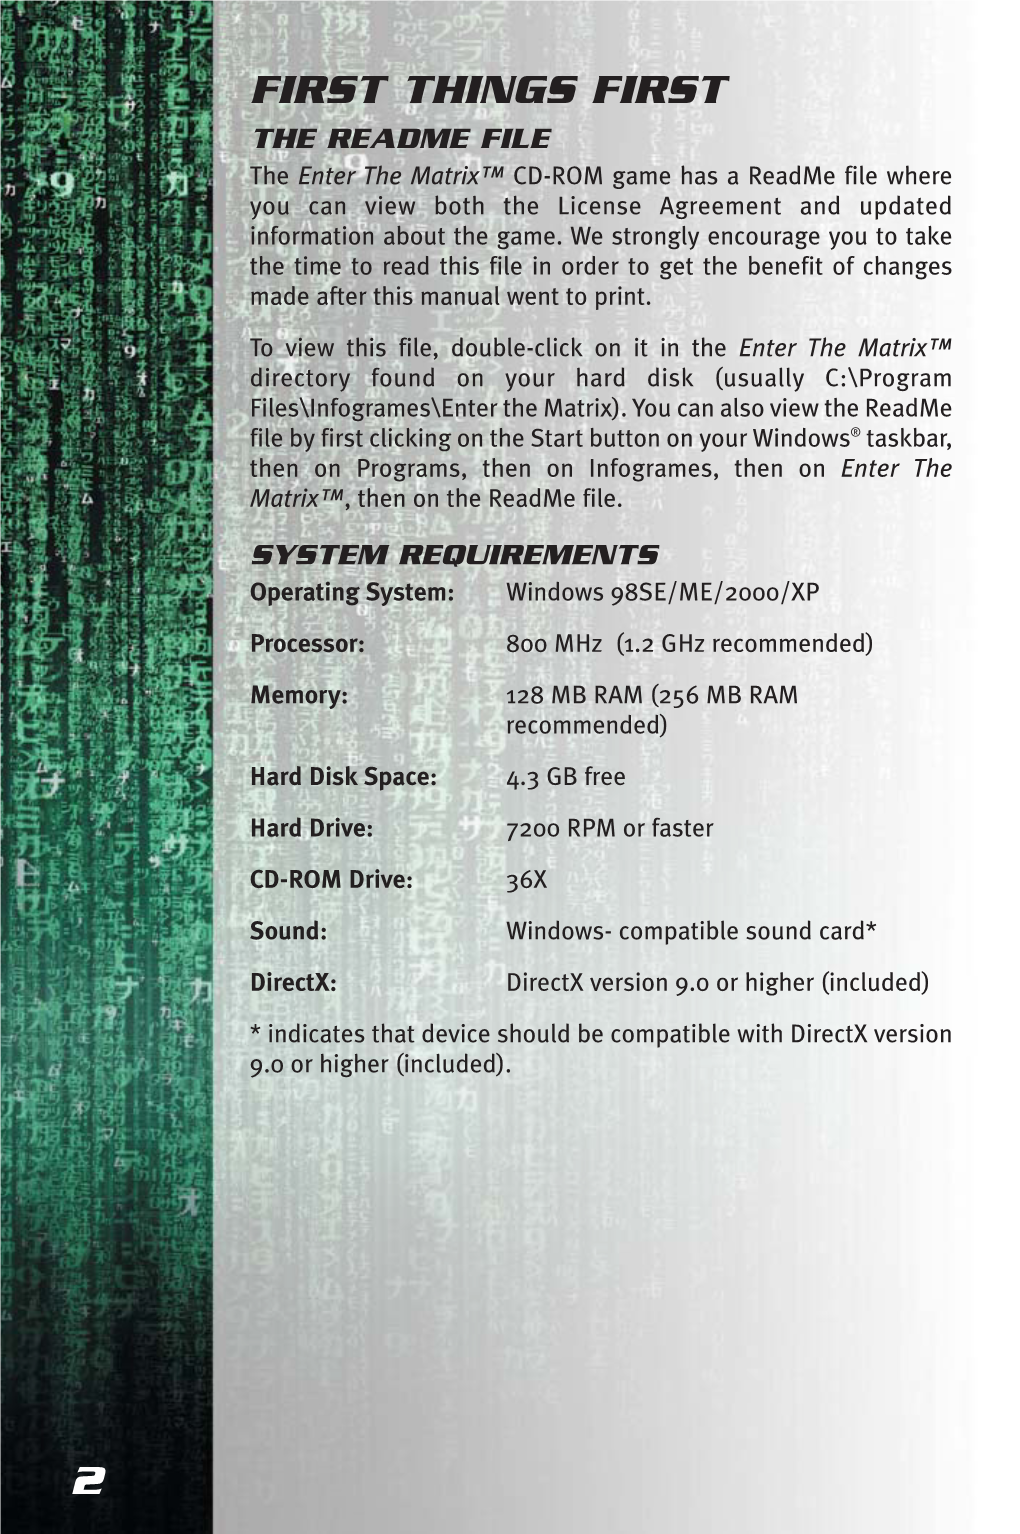 Enter the Matrix Windows Manual